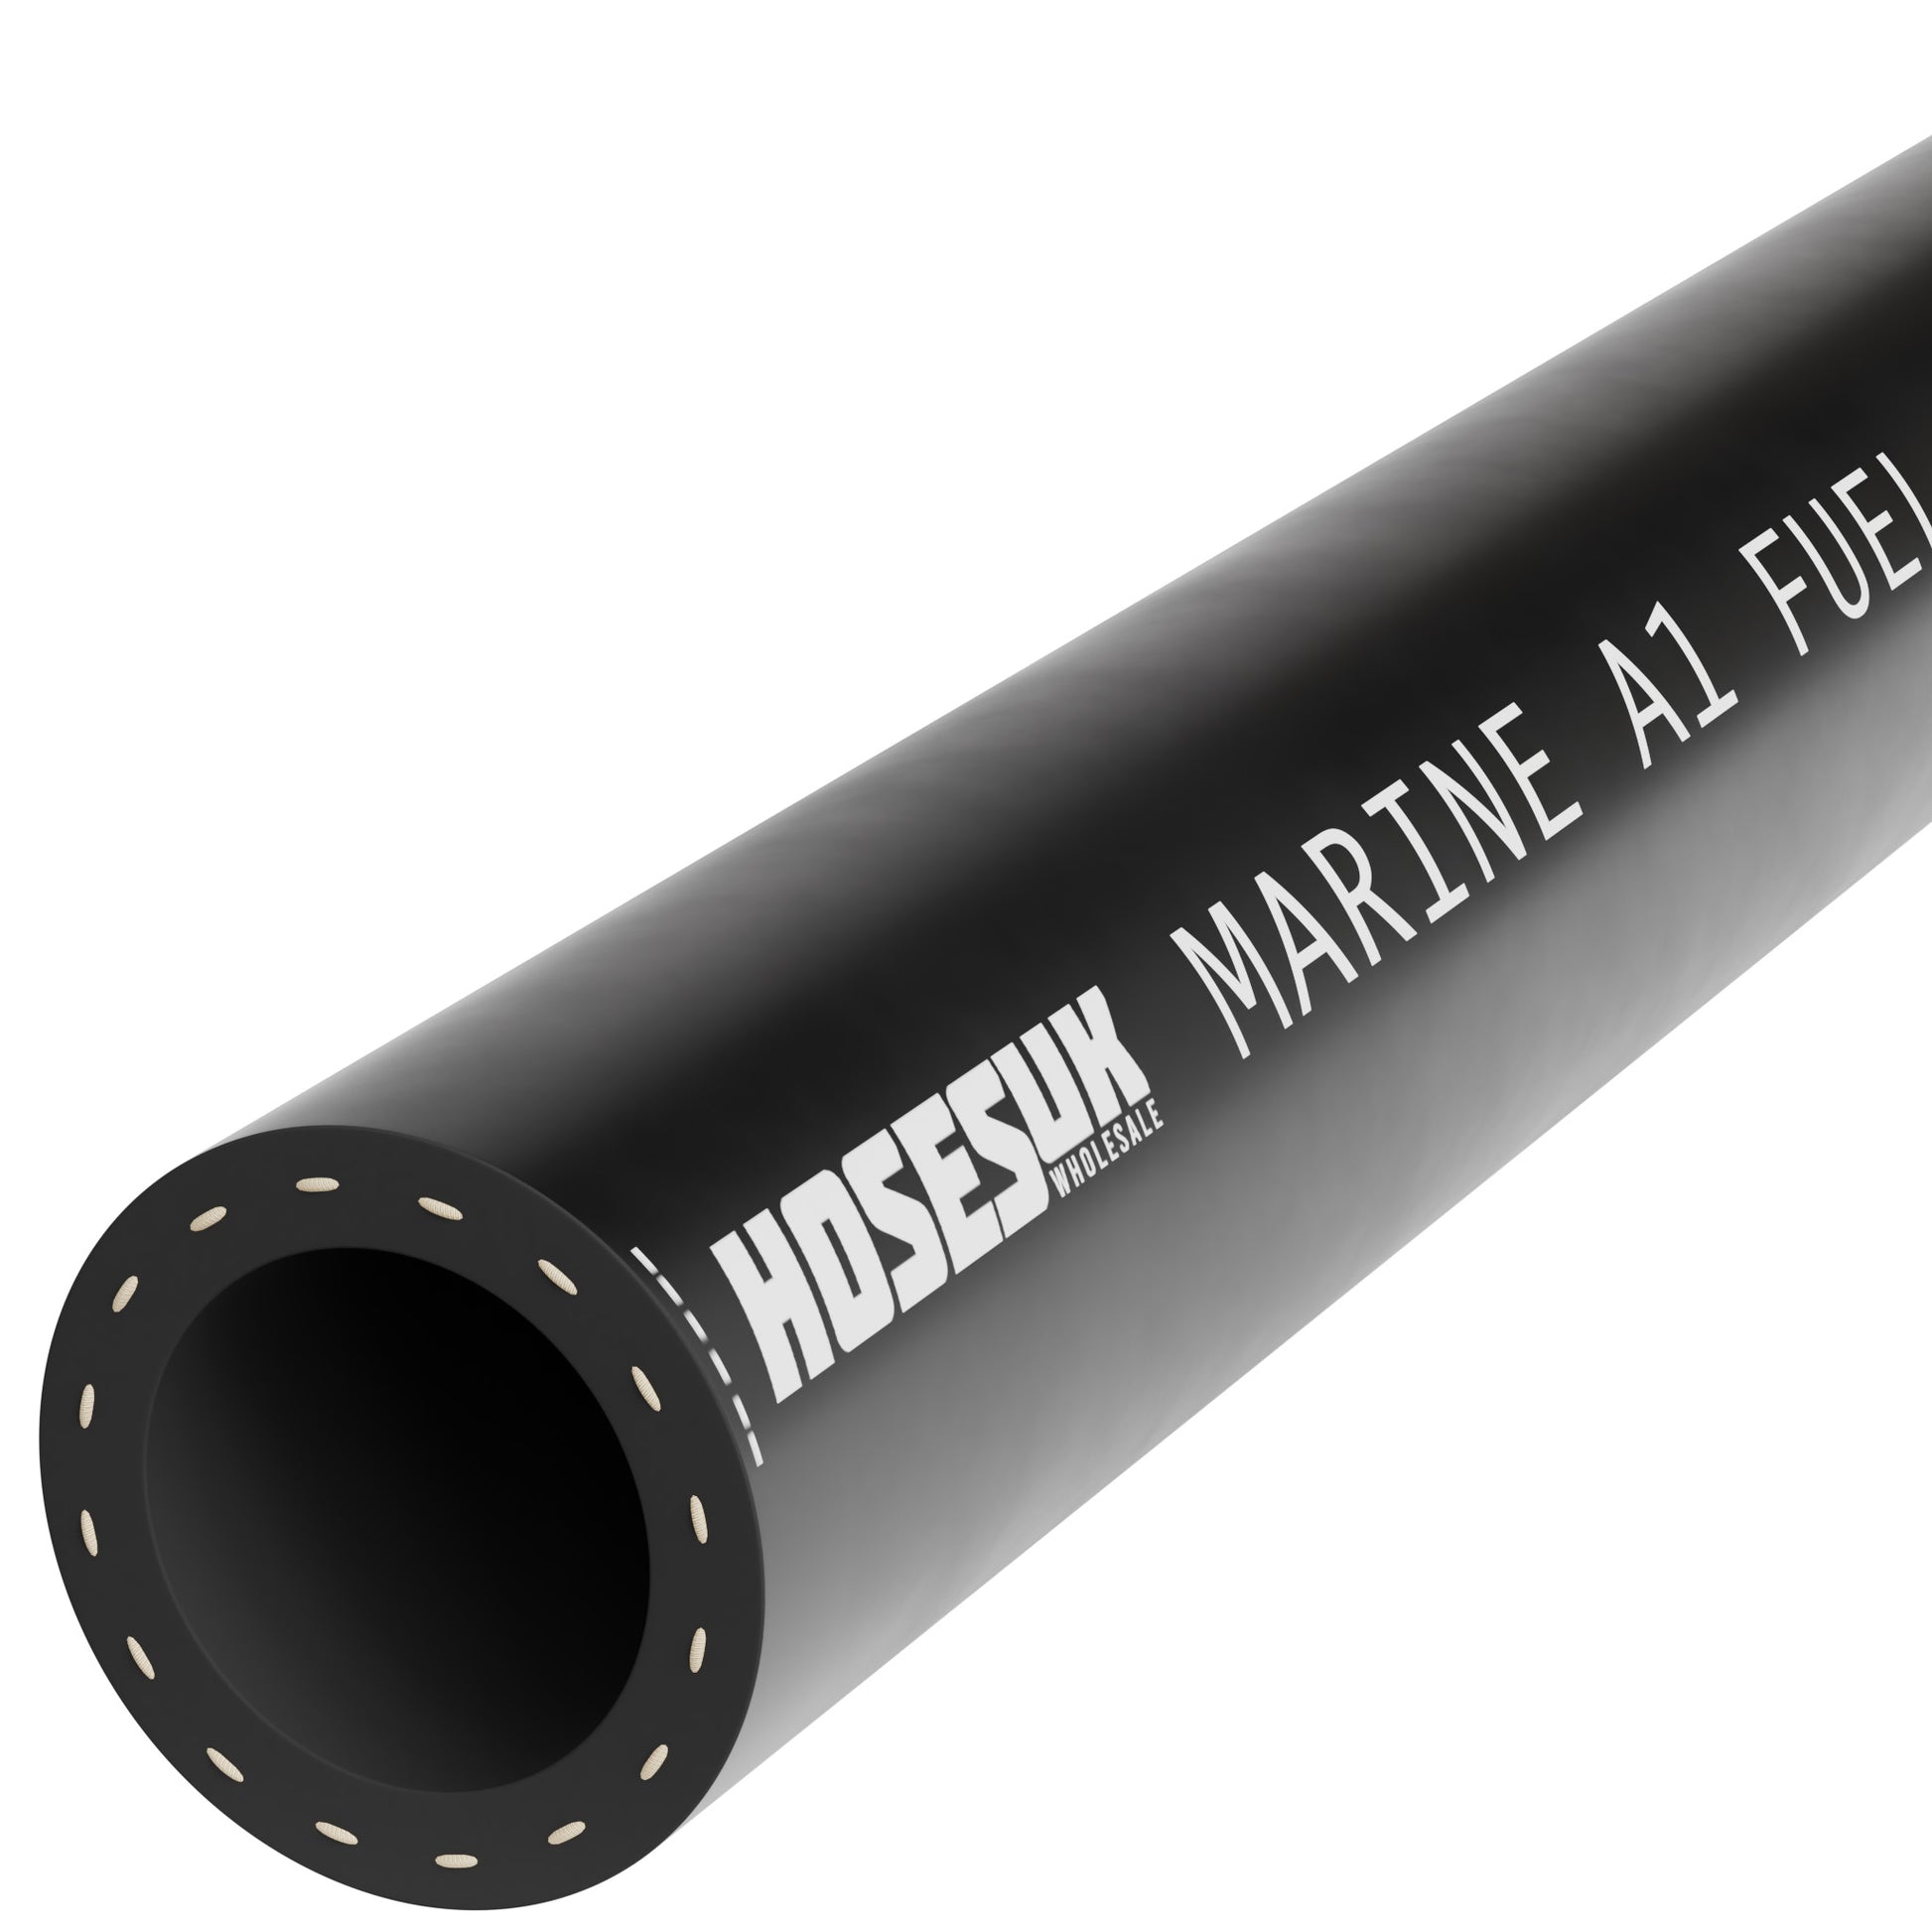 19mm ID Rubber Marine Fuel & Oil Hose A1  Hoses UK   